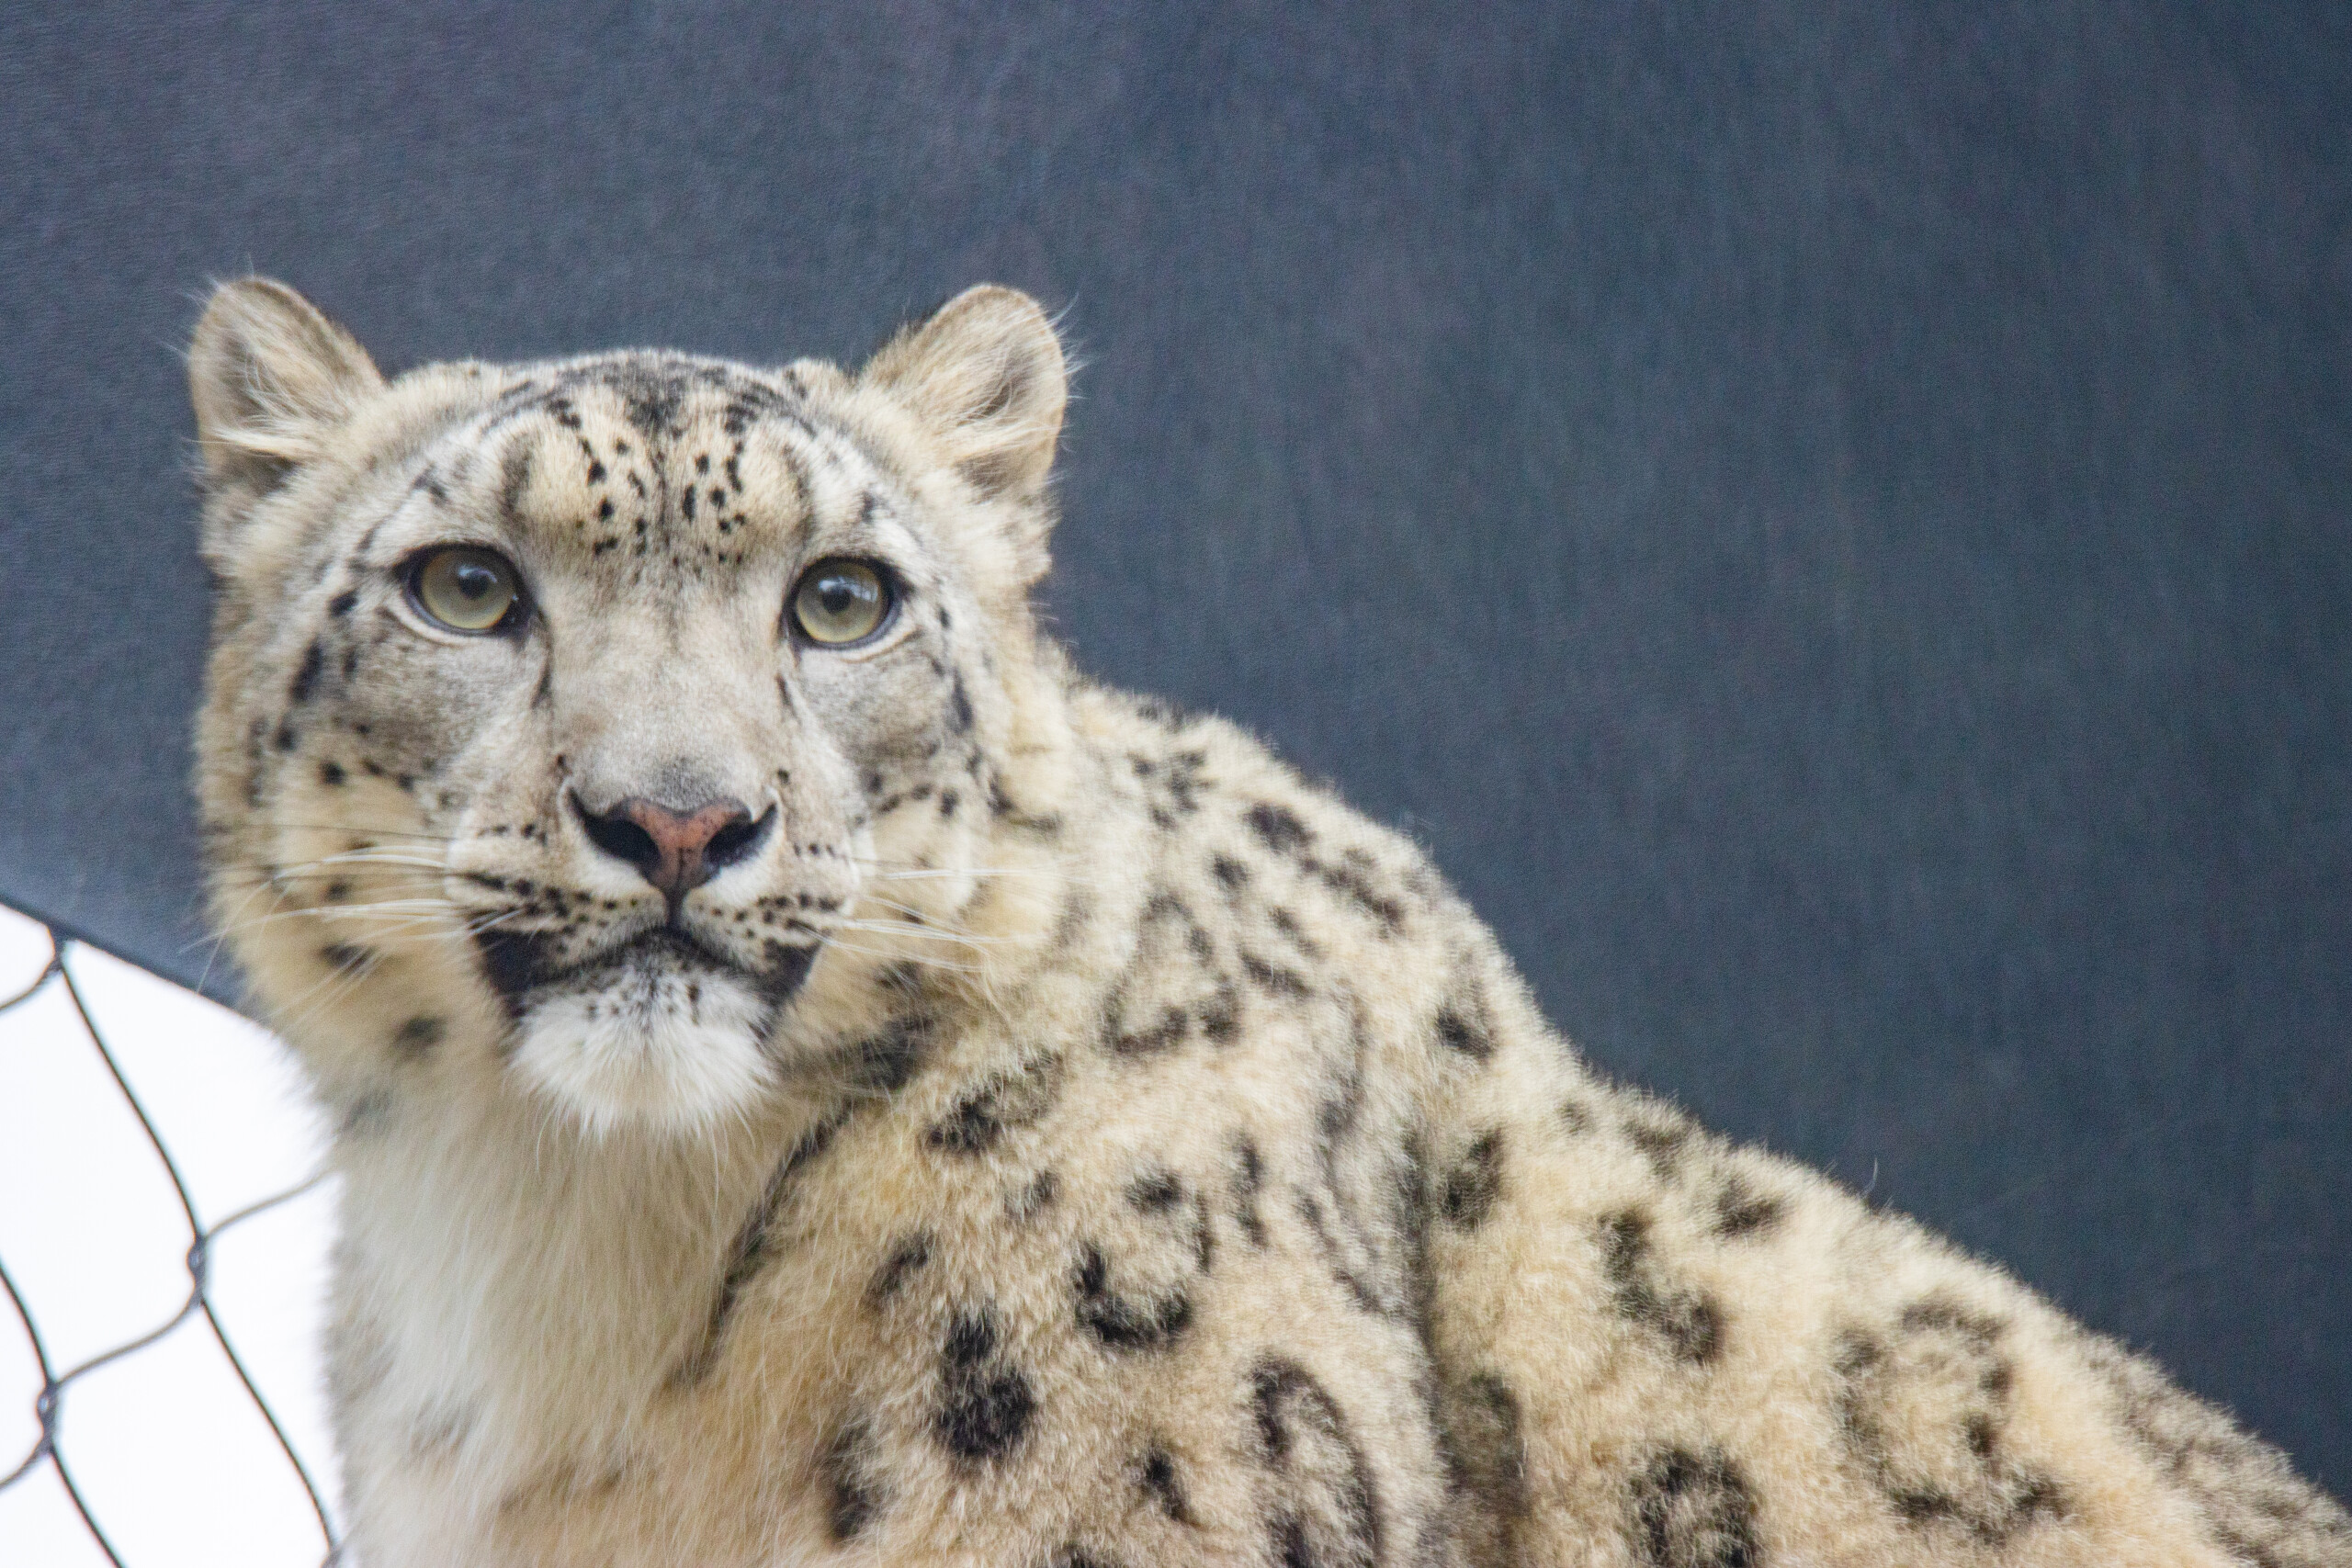 Philadelphia Zoo Announces Arrival of Snow Leopard for Species Survival Plan Breeding Program